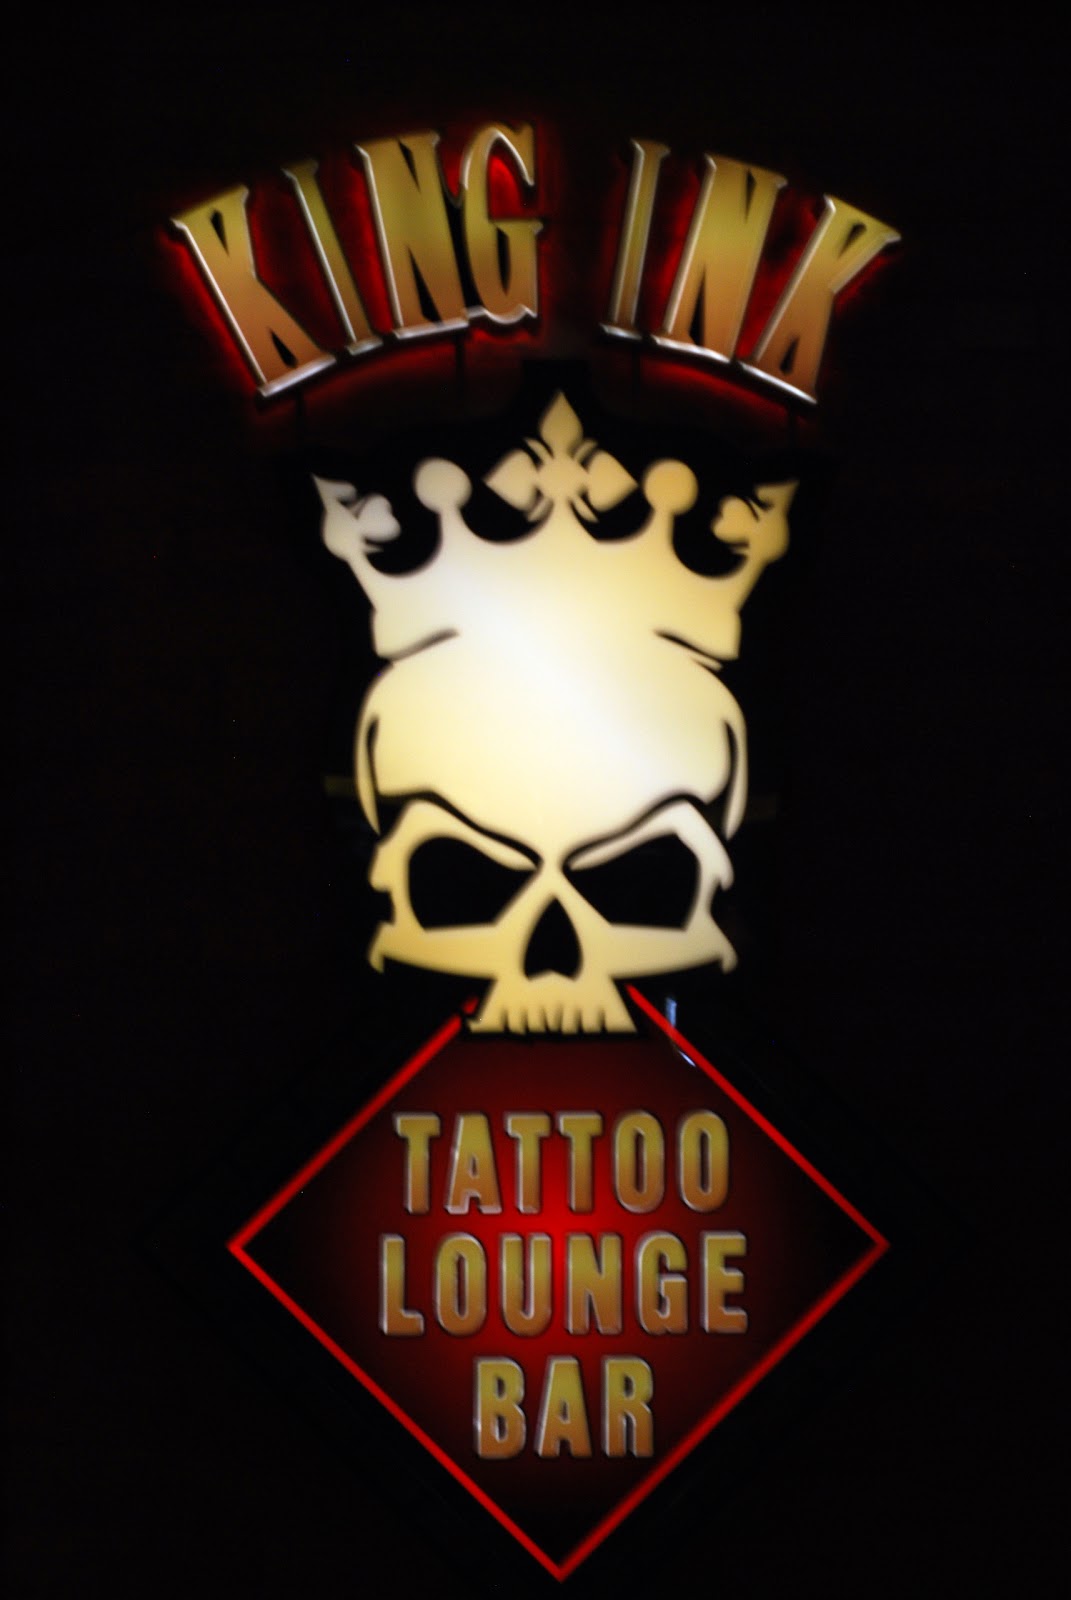 King Ink Tattoo Lounge Bar